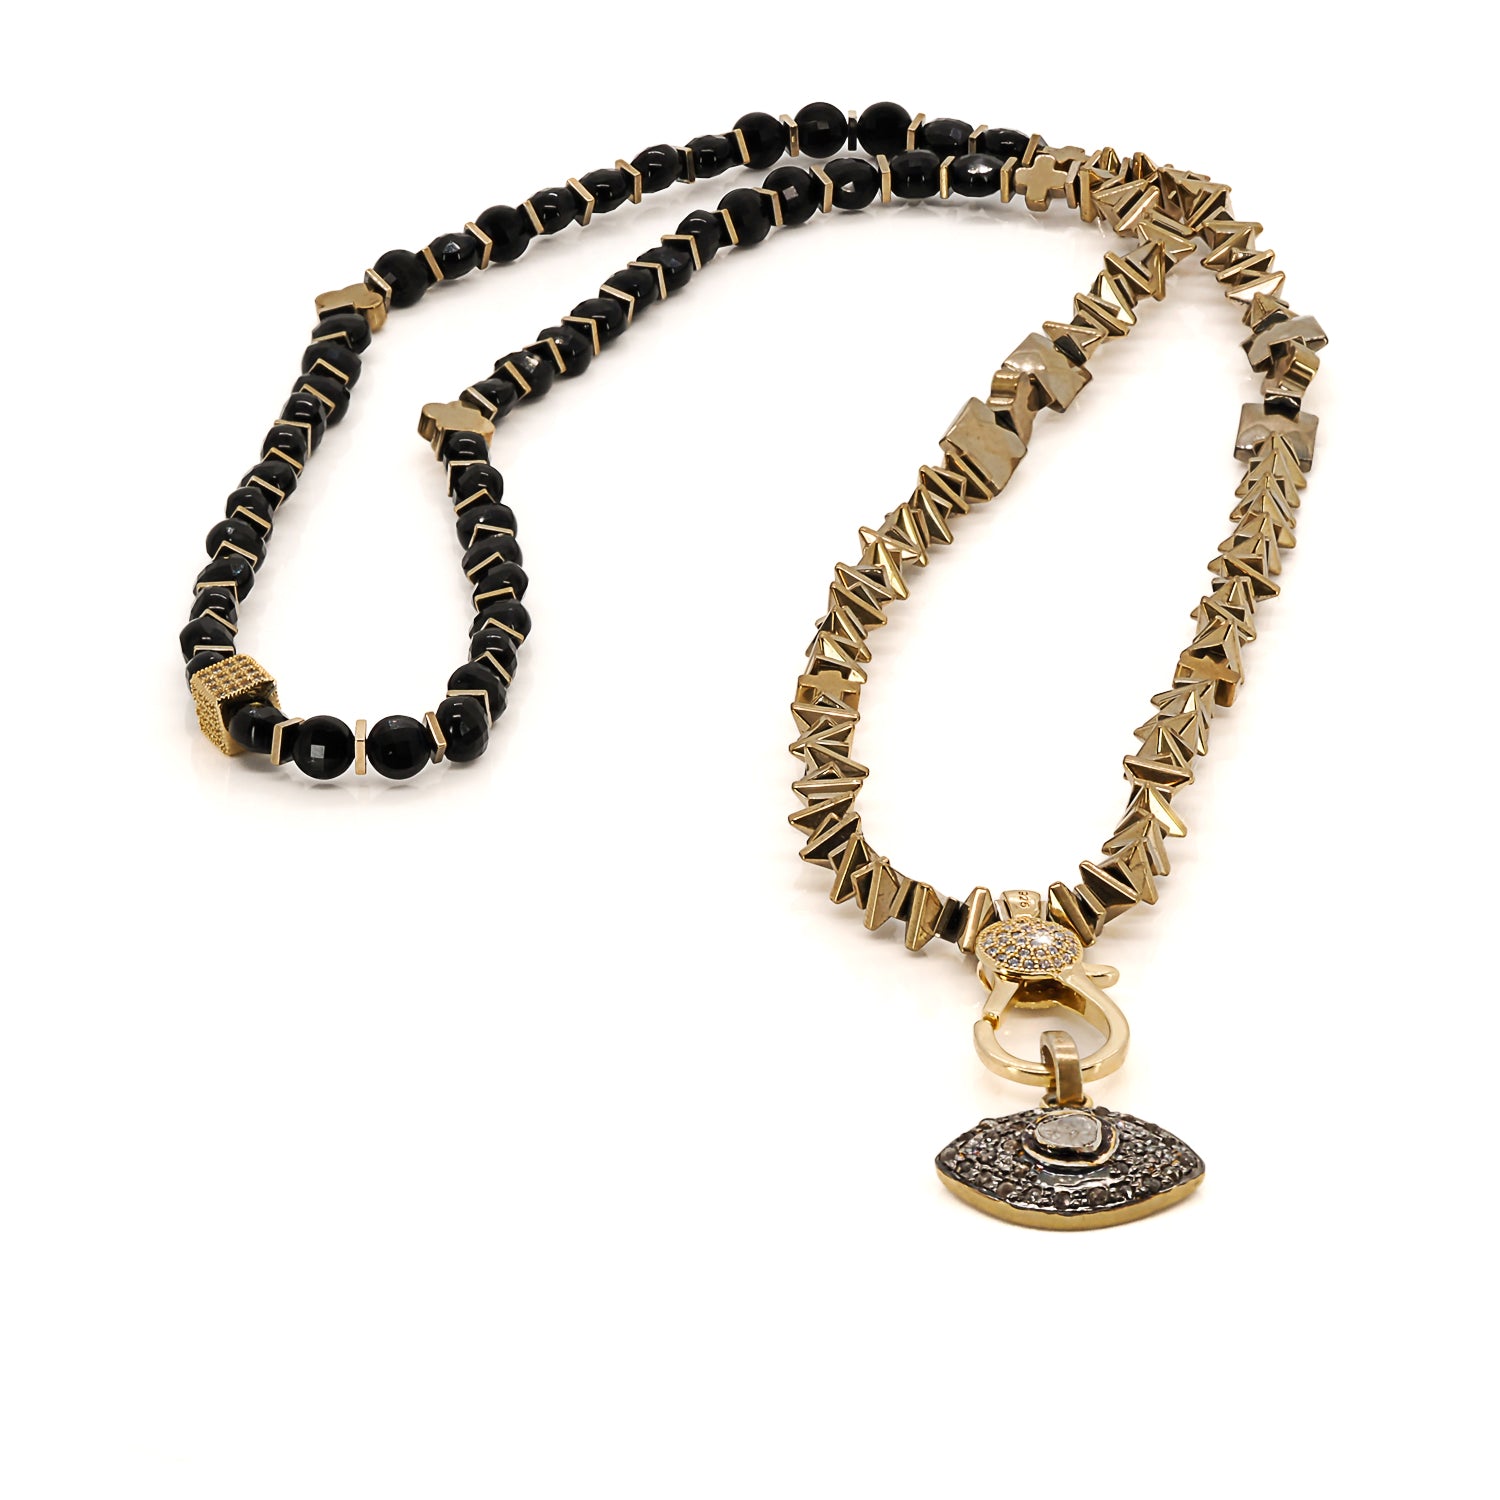 Intricate Harmony: Black Onyx Beaded Necklace with Protective Pave Diamond Pendant